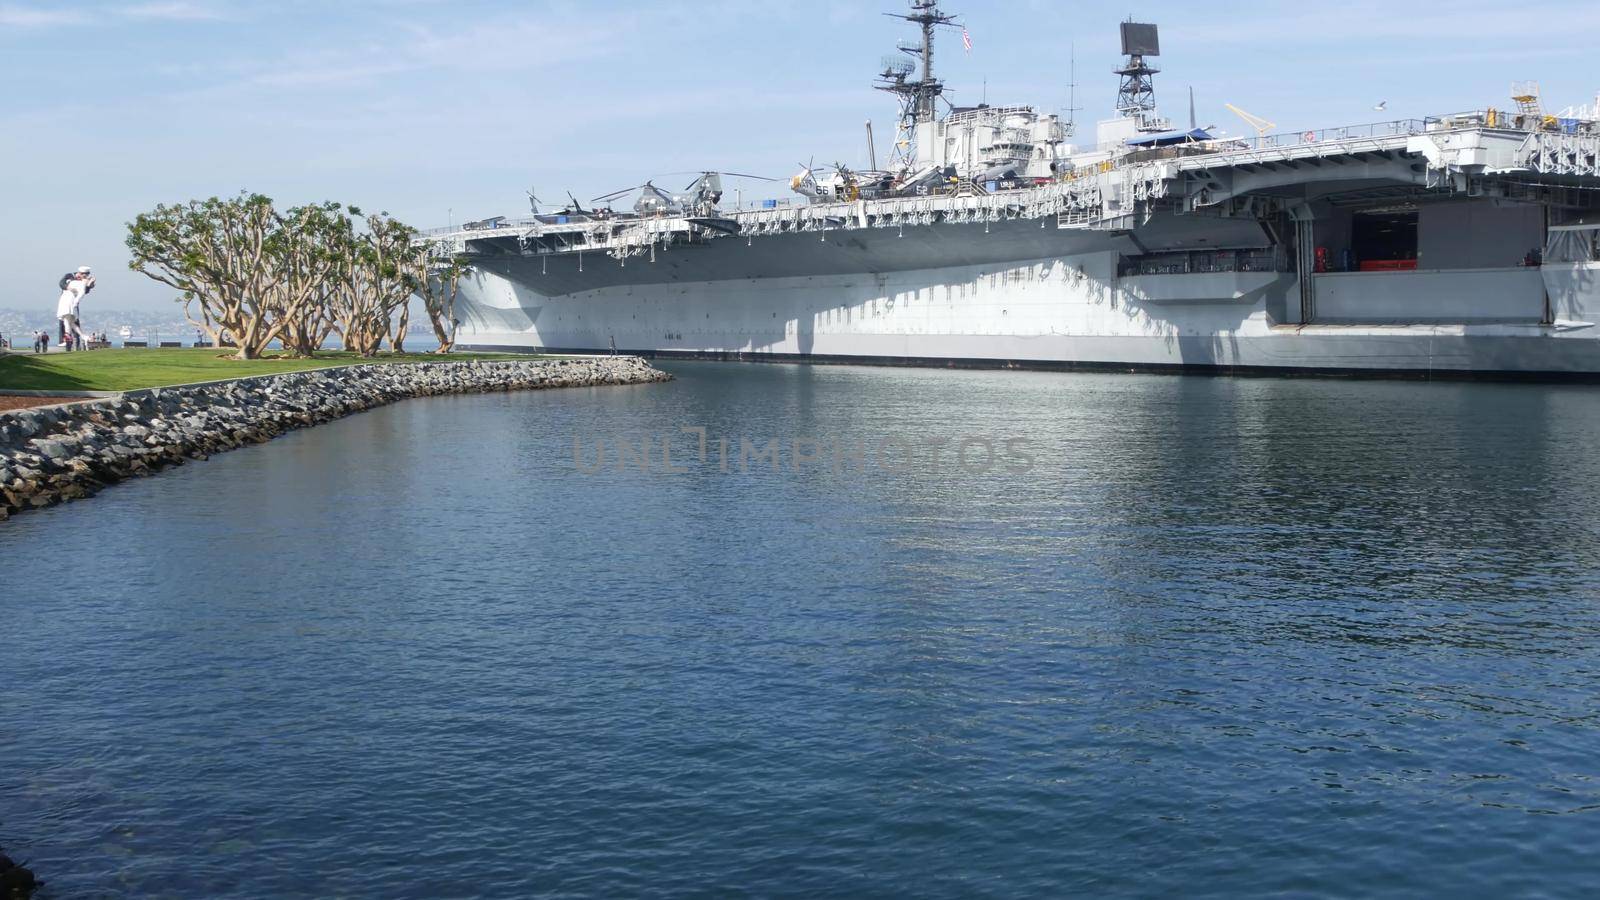 SAN DIEGO, CALIFORNIA USA - 15 JAN 2020: USS Midway military aircraft carrier, historic war ship. Naval army battleship. Maritime warship, legend of navy fleet near Unconditional Surrender Statue.